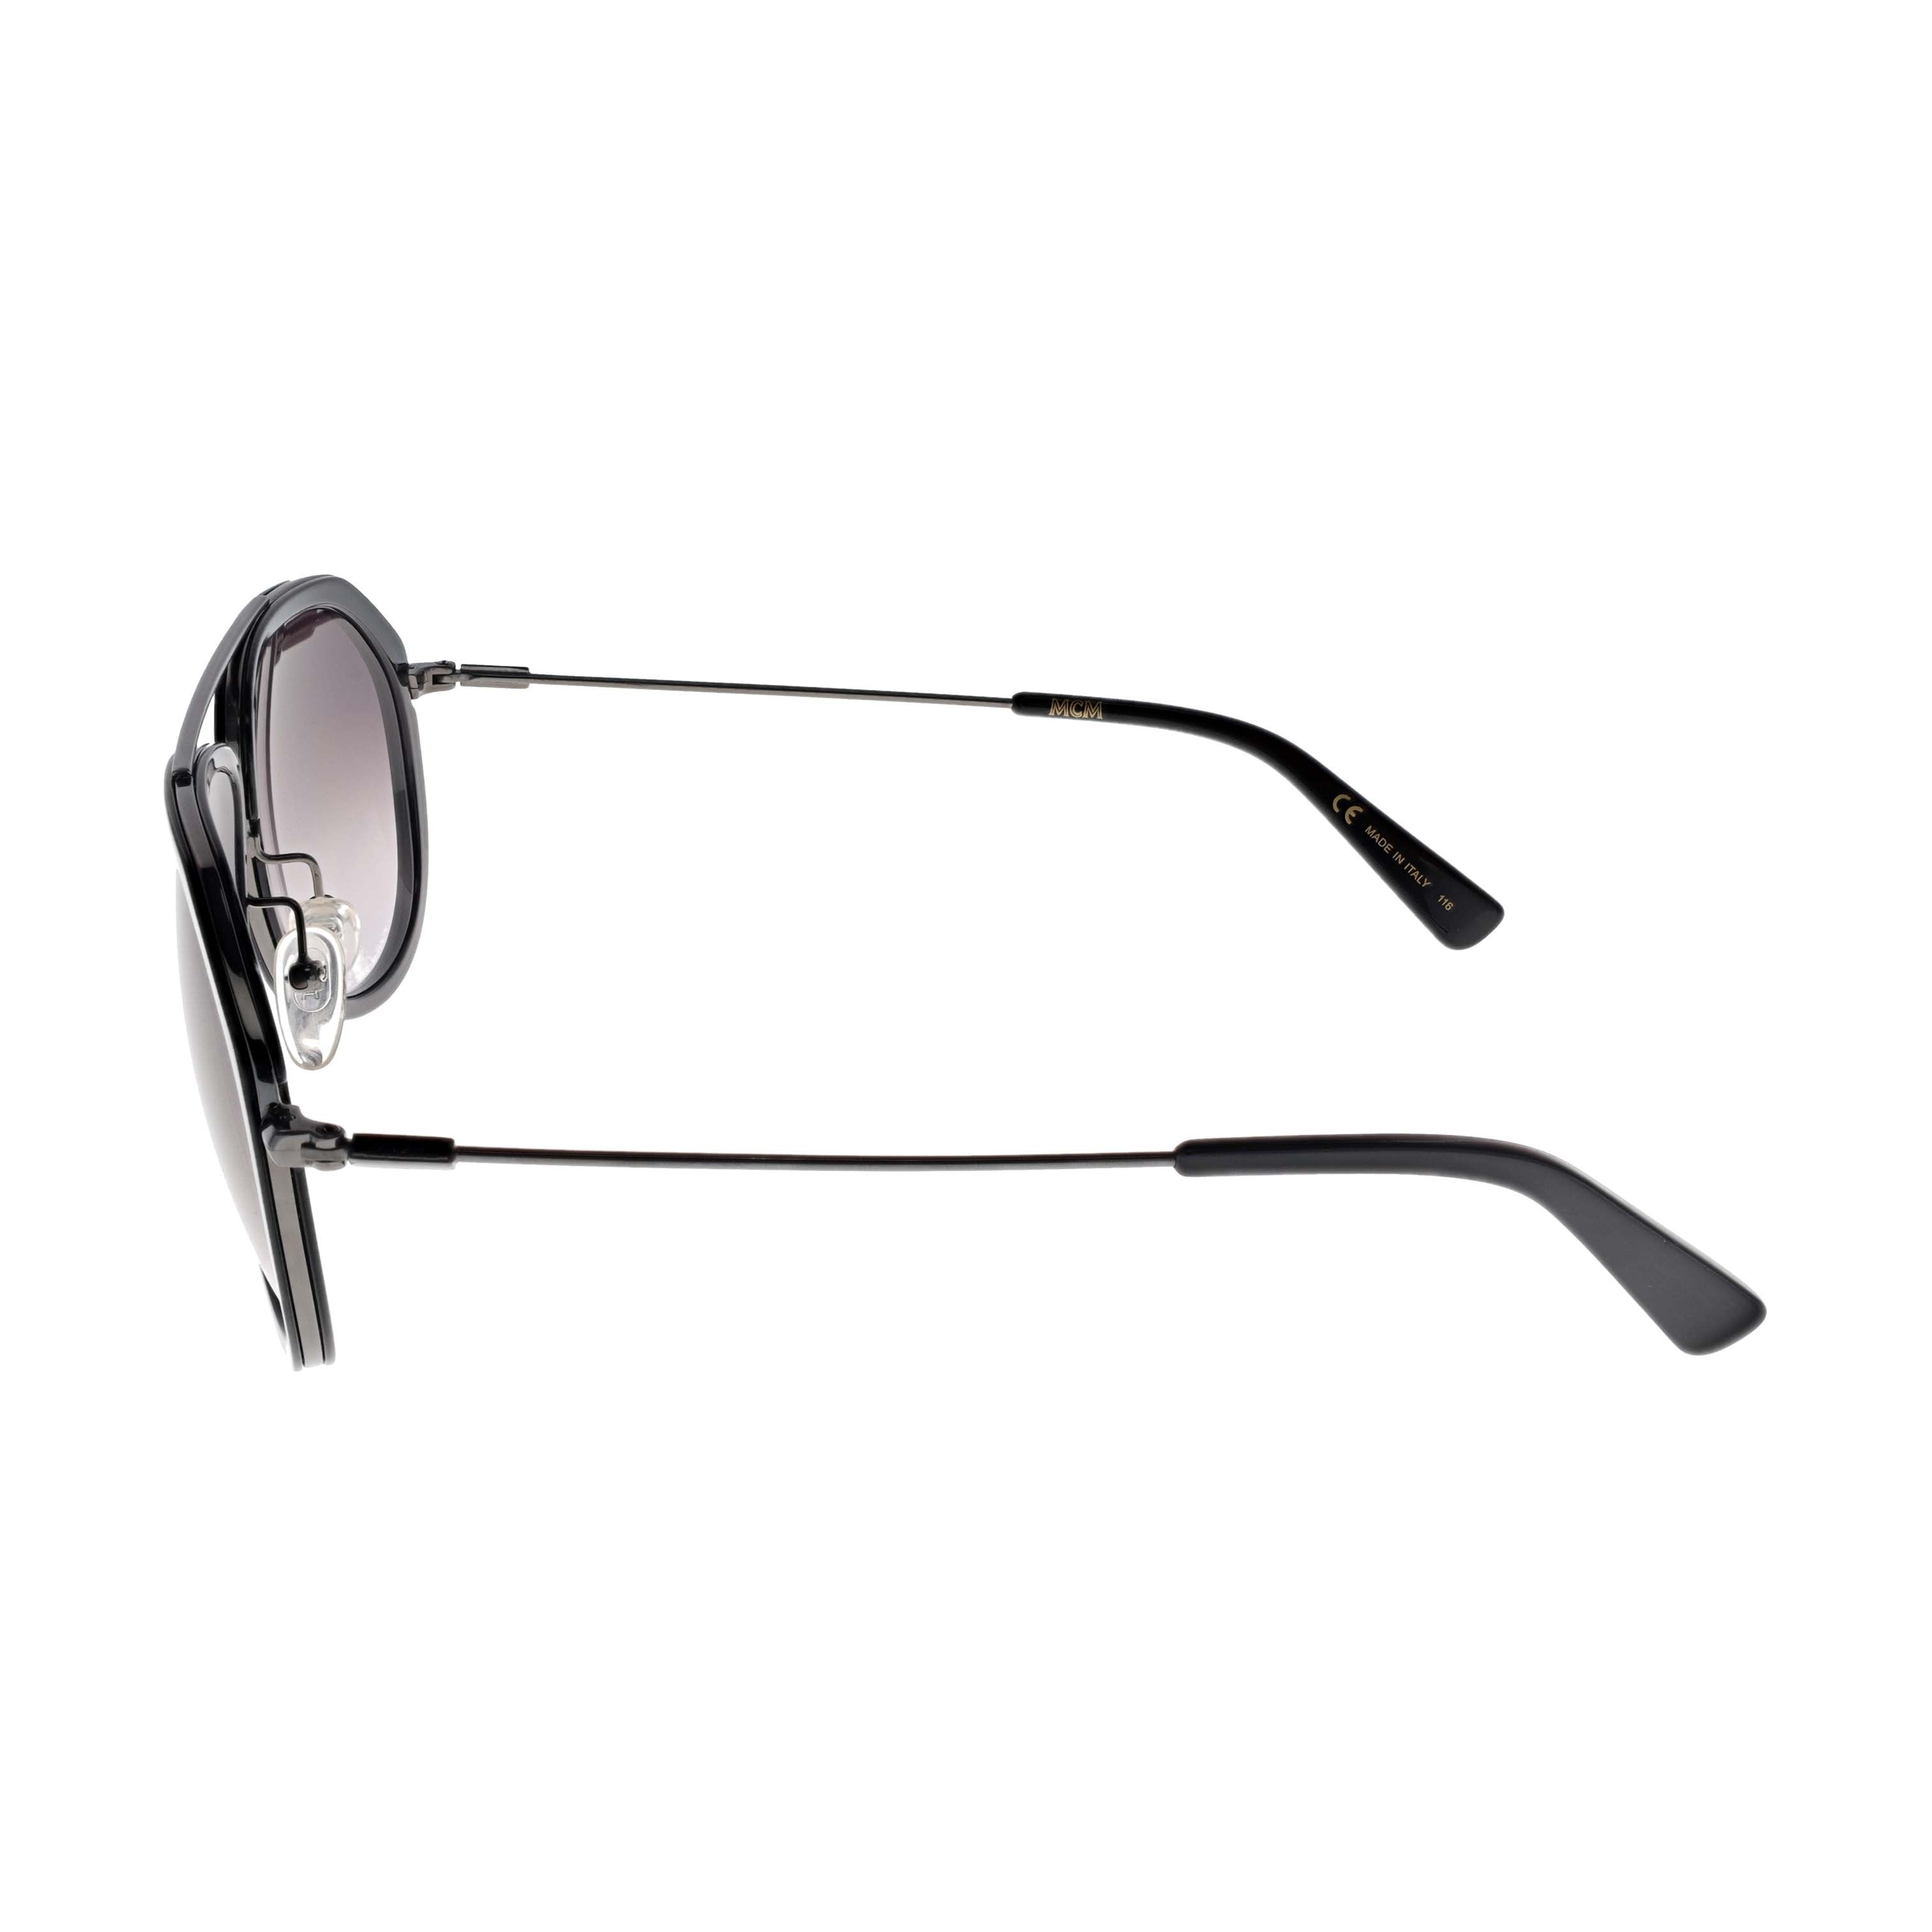 MCM Aviator Sunglasses - MCM613S